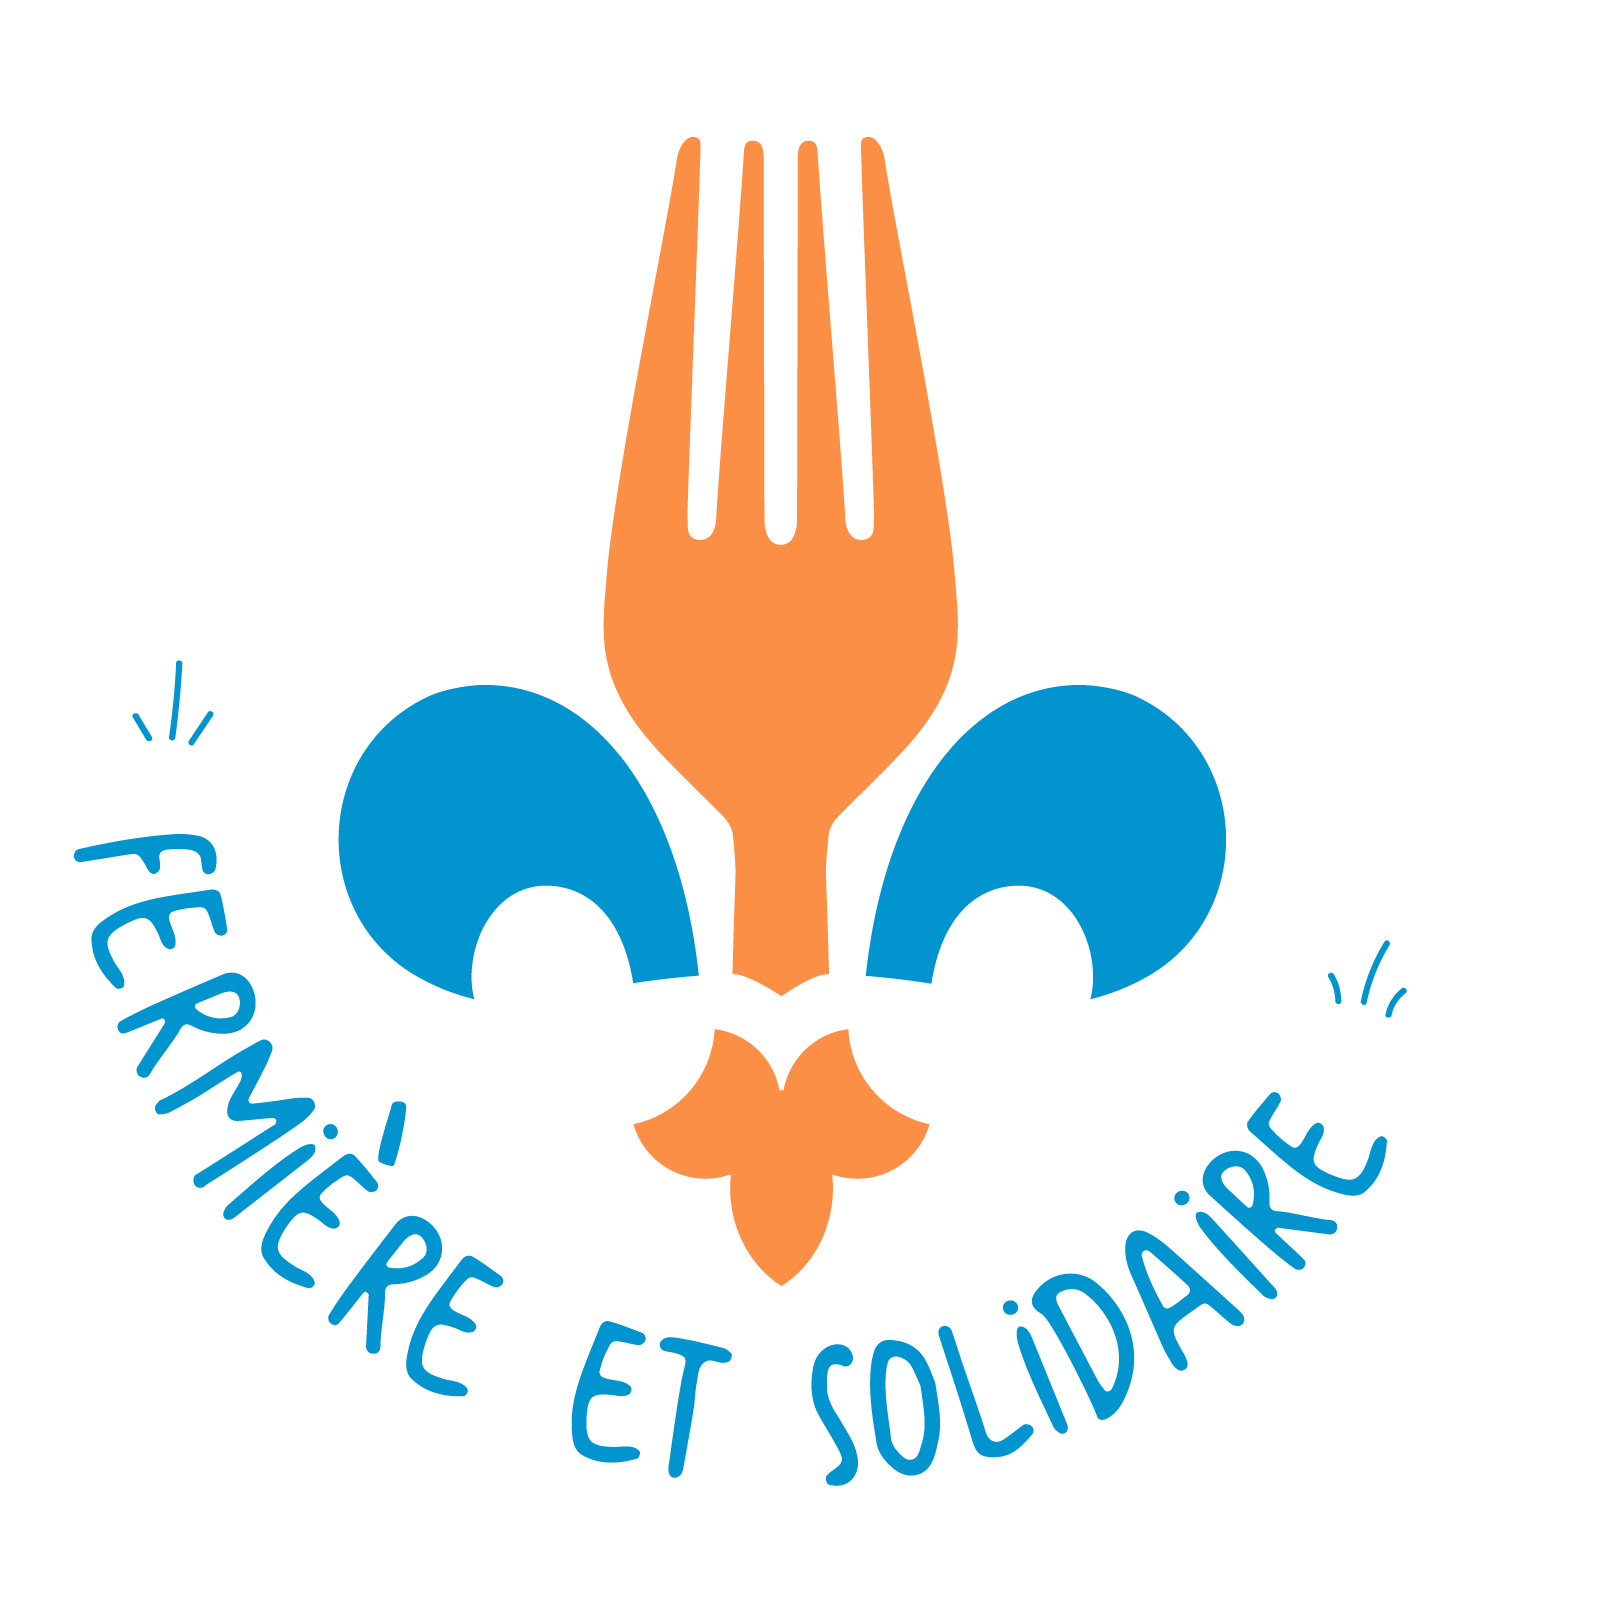 Carrefour Solidaire Community Food Centre logo